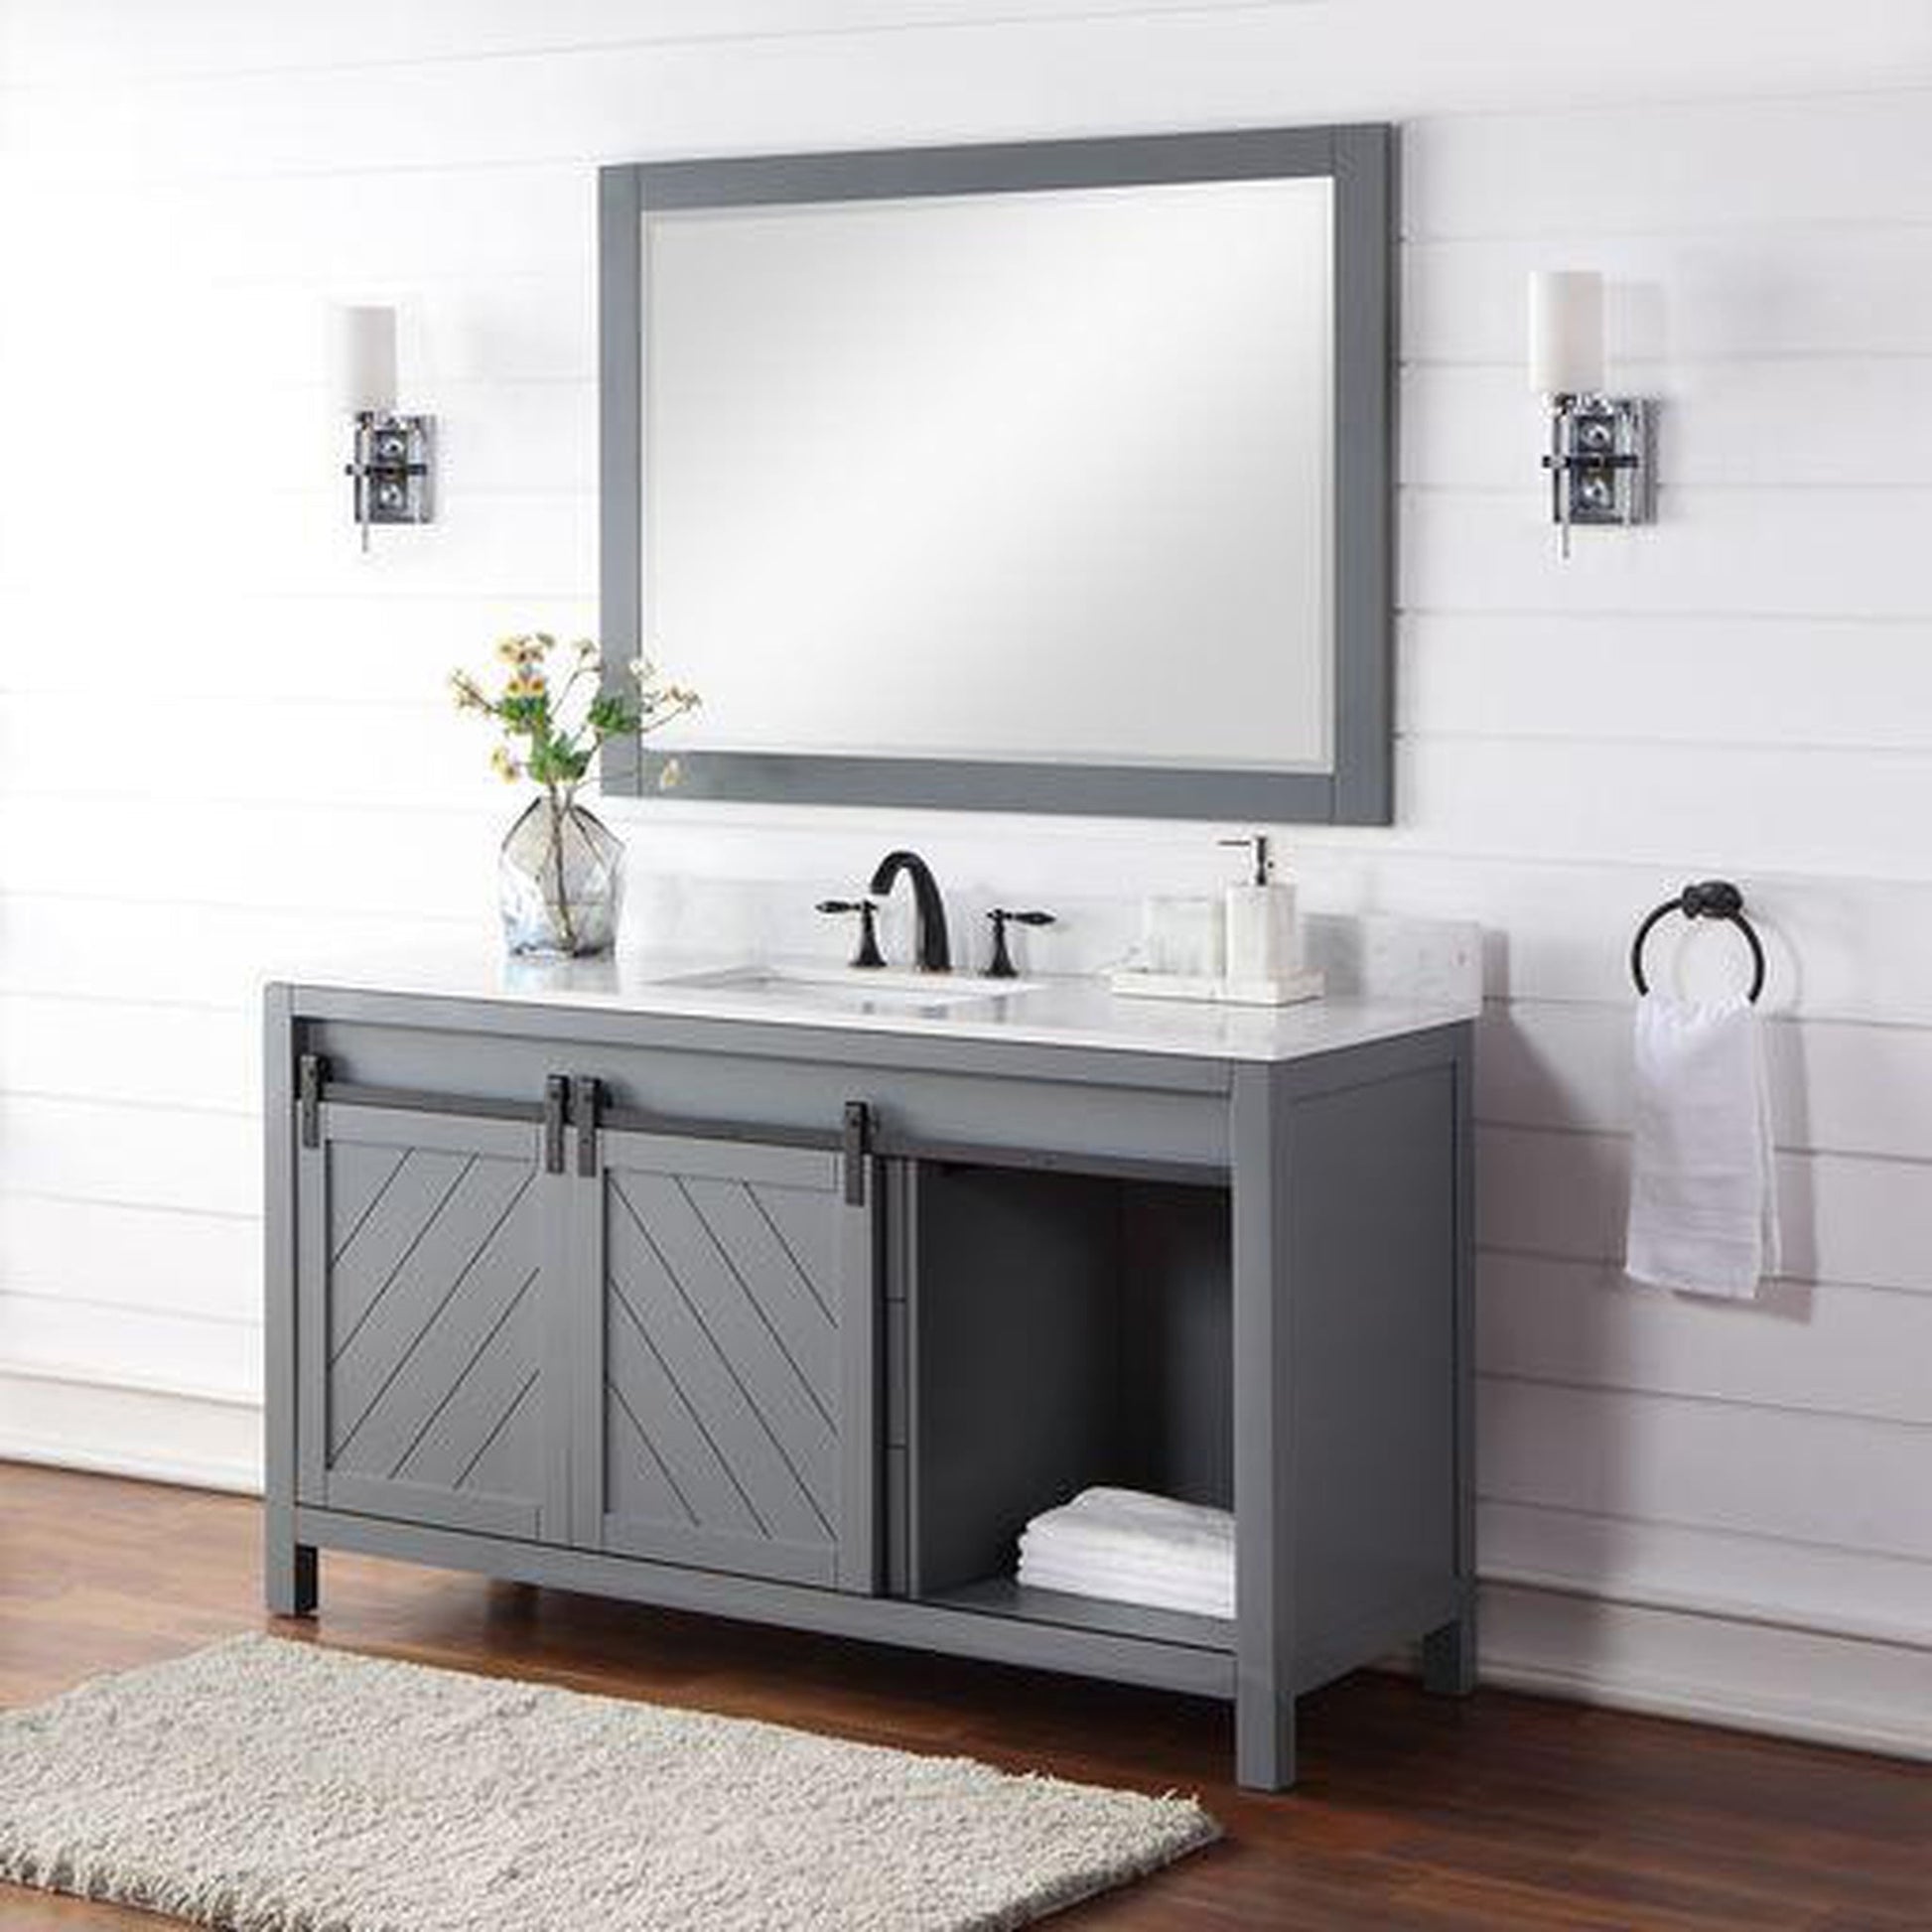 Altair Kinsley 60" Single Gray Freestanding Bathroom Vanity Set With Mirror, Aosta White Composite Stone Top, Rectangular Undermount Ceramic Sink, and Overflow